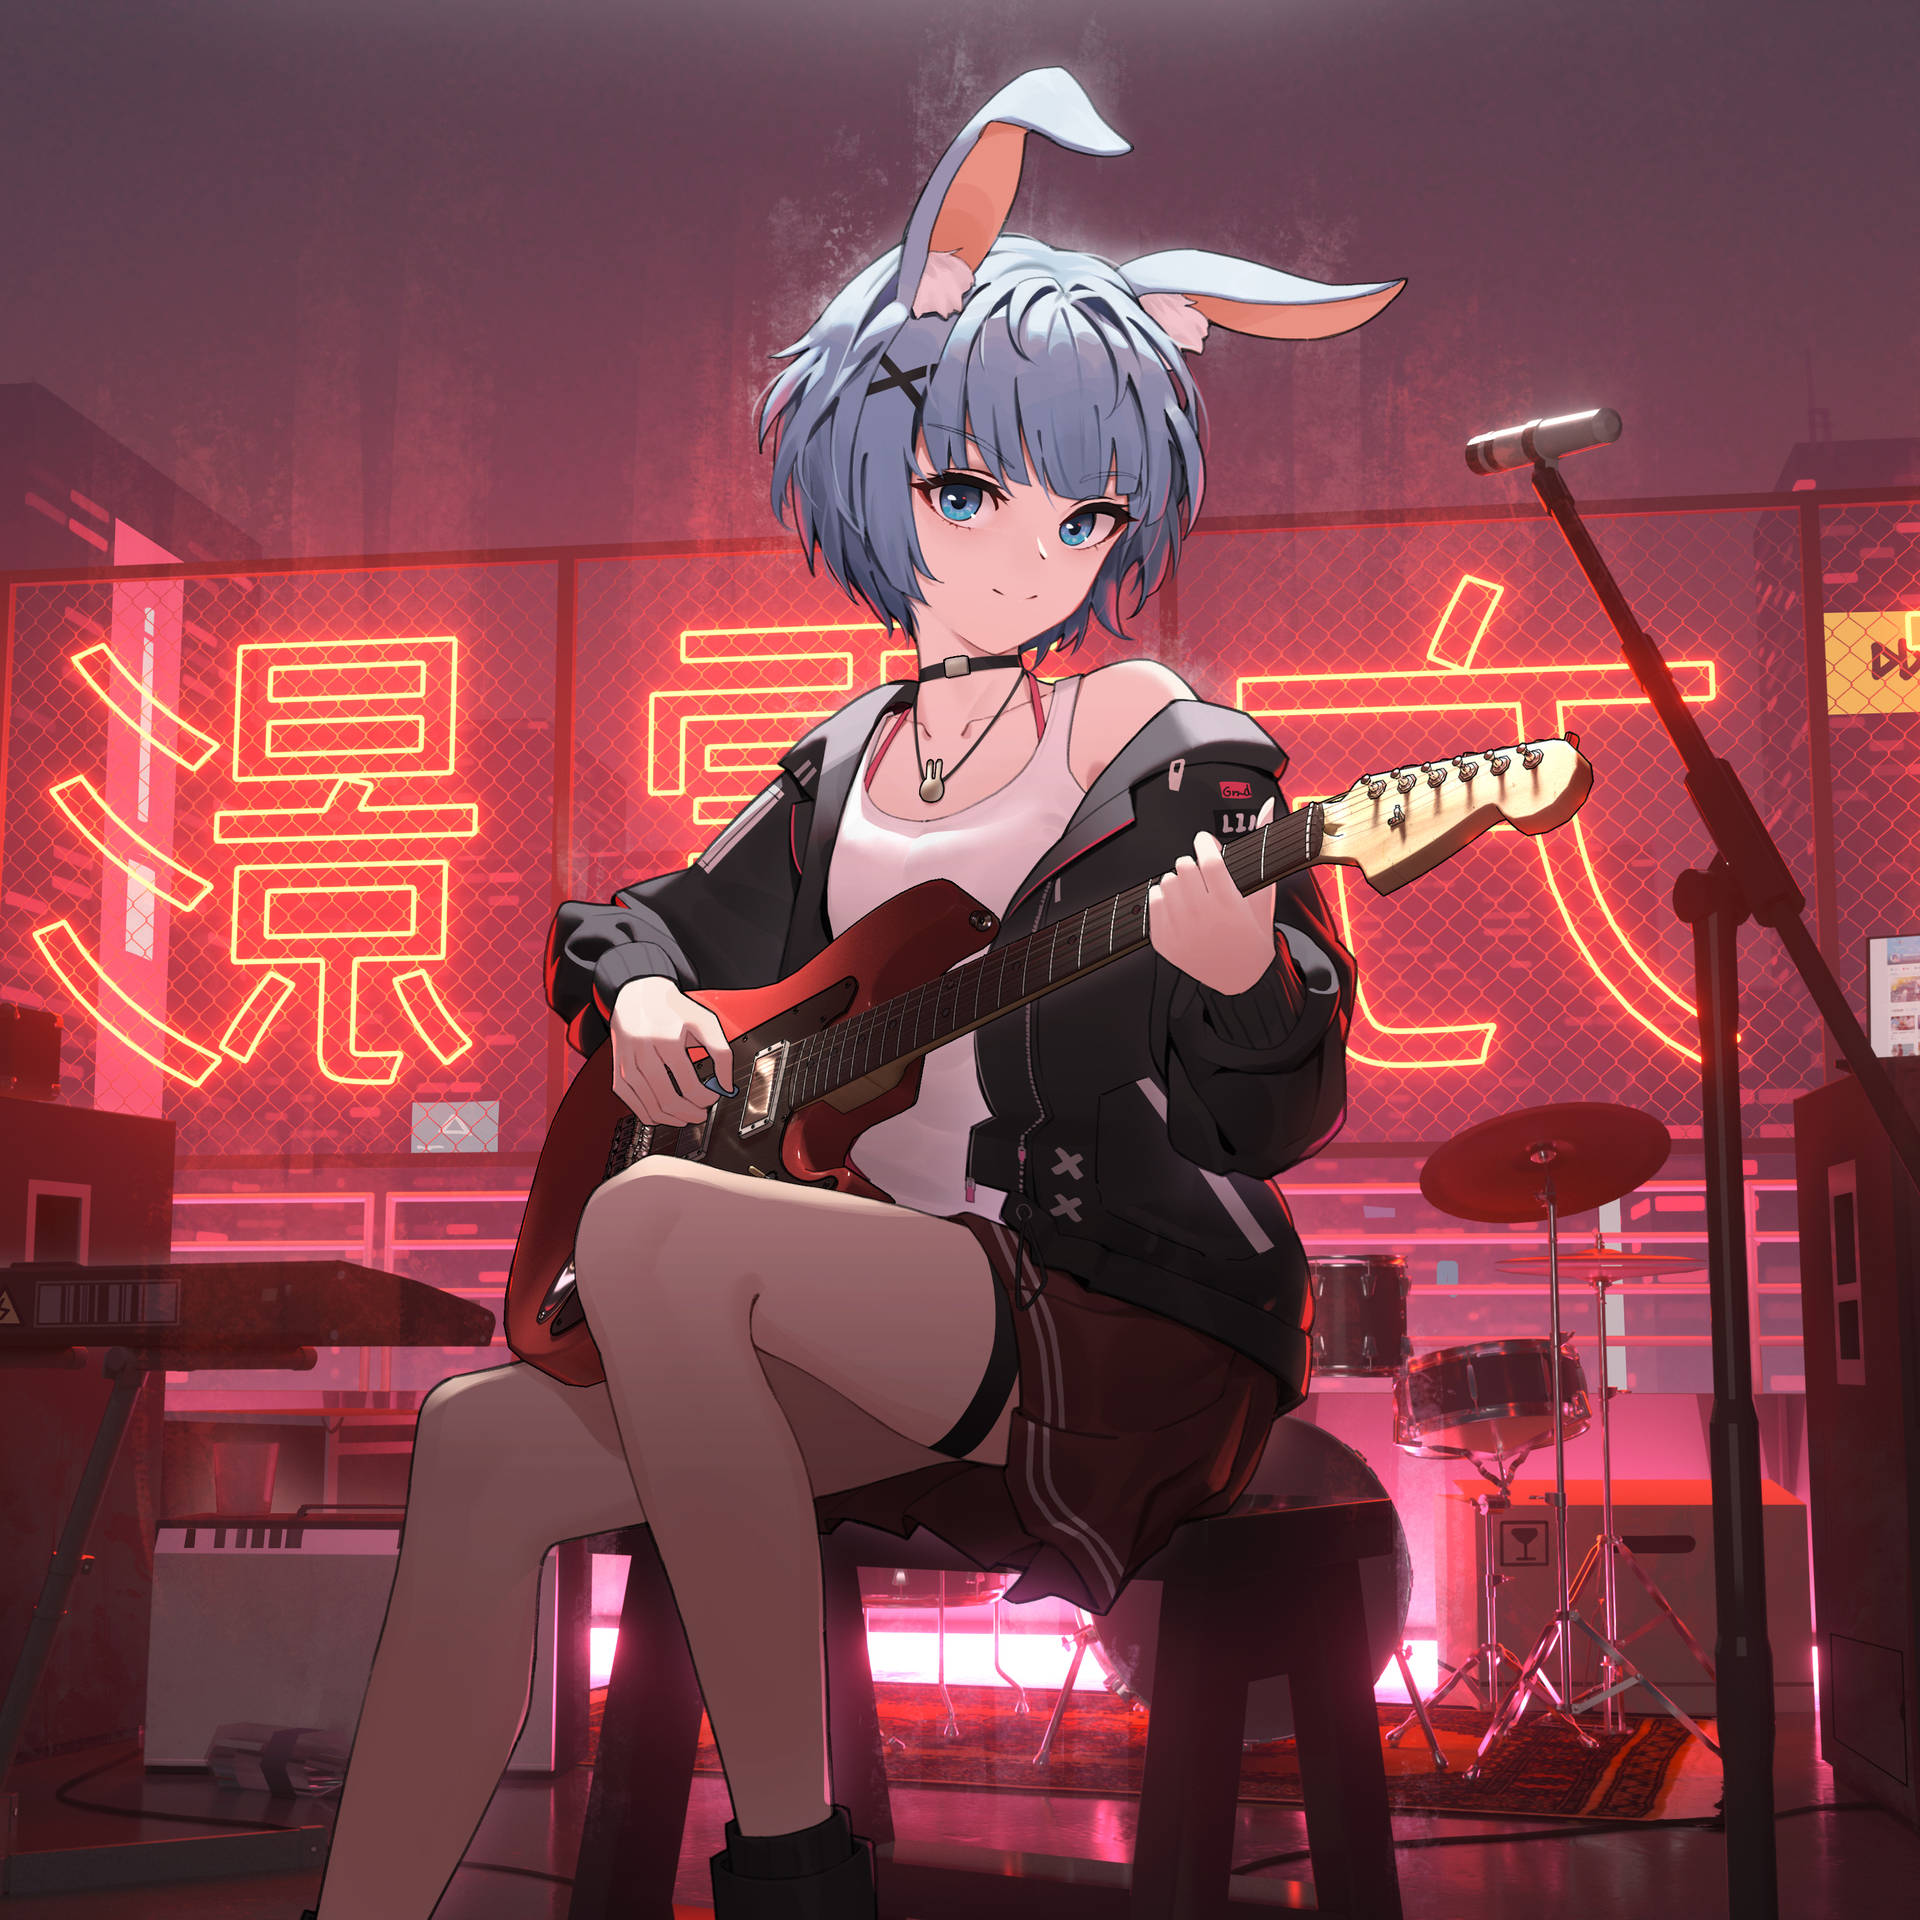 Anime IPad Bunny Girl With Guitar Wallpaper